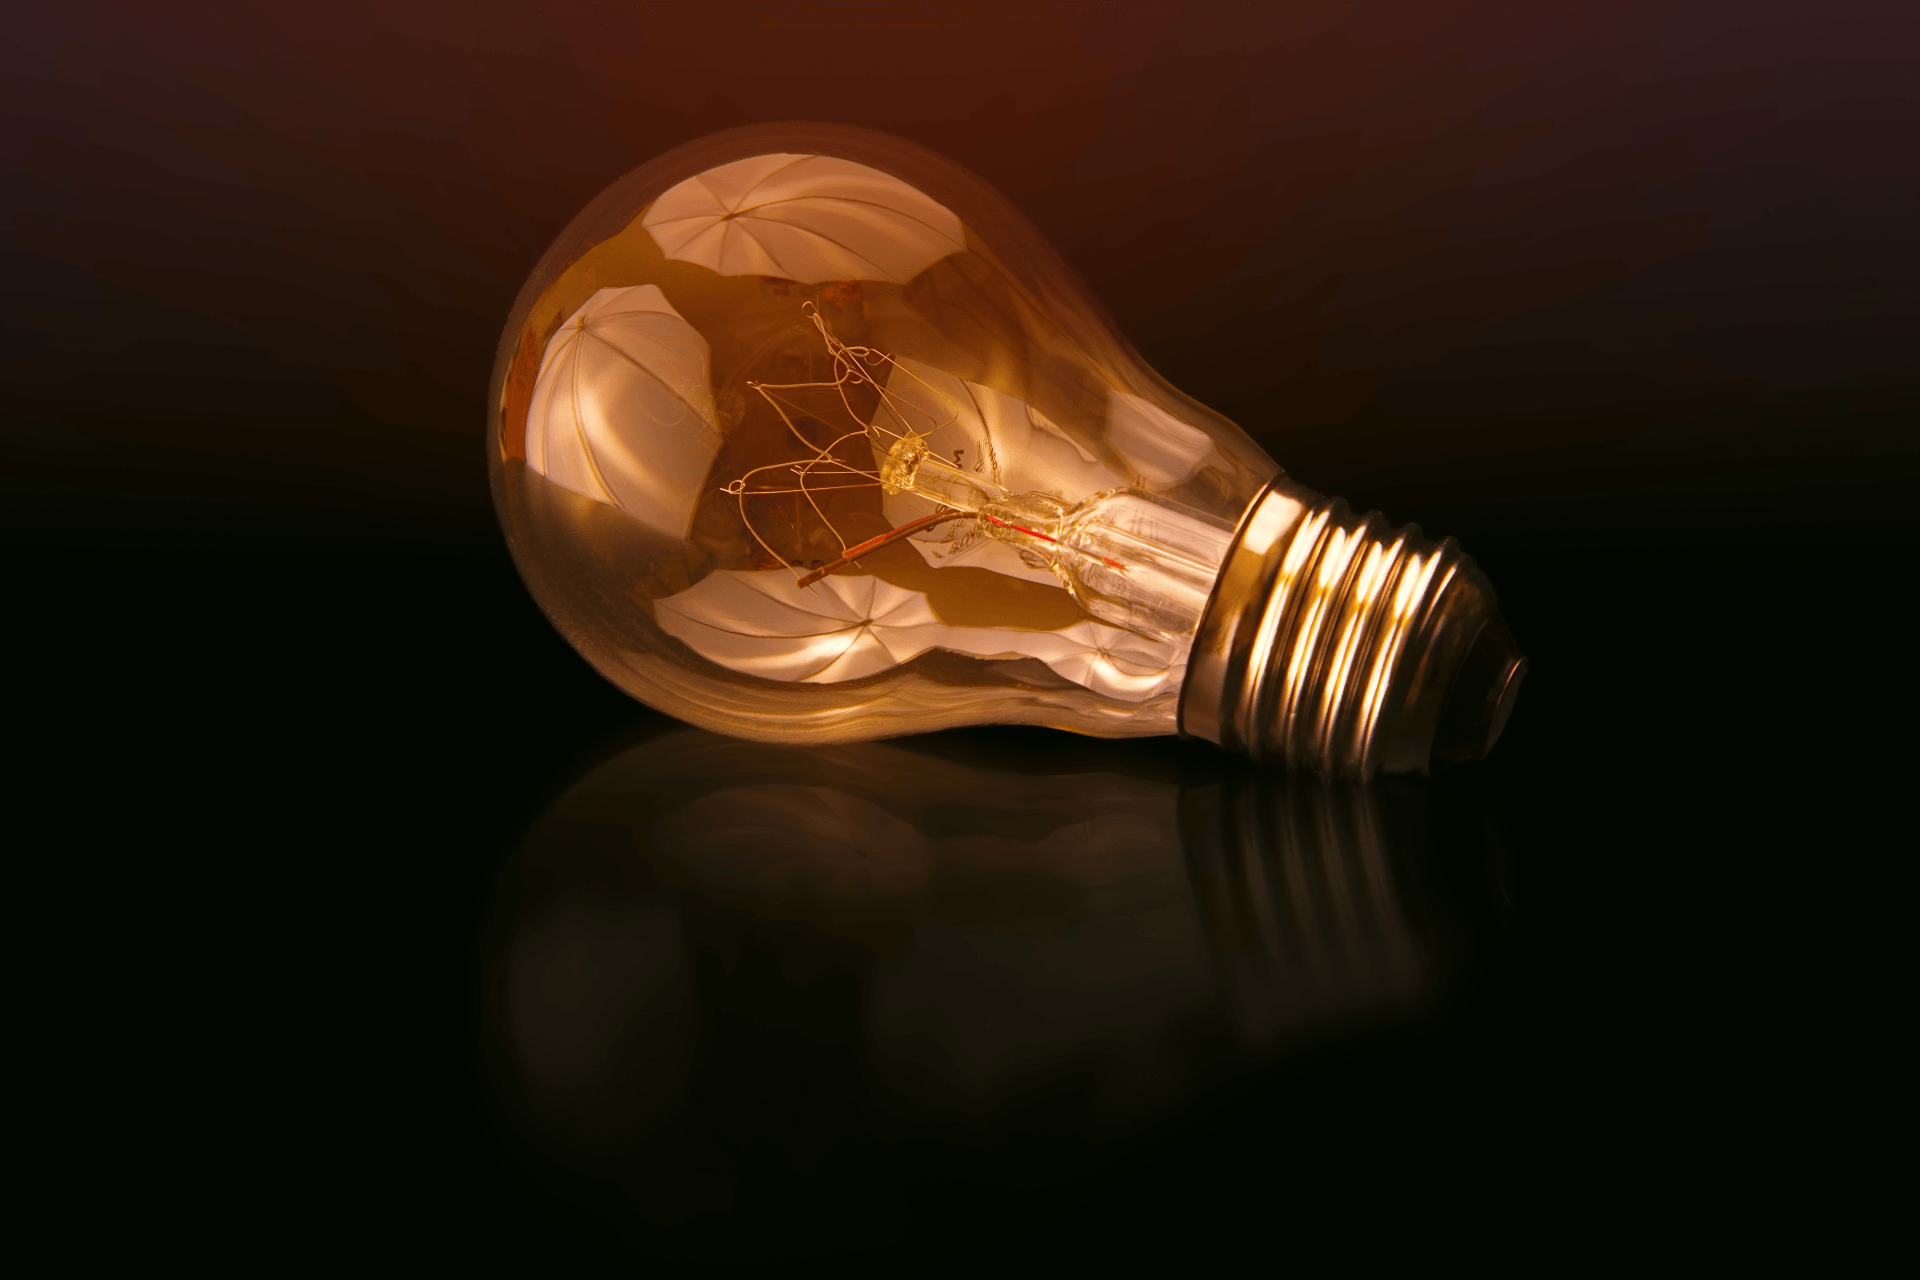 lightbulb facing down a dark background